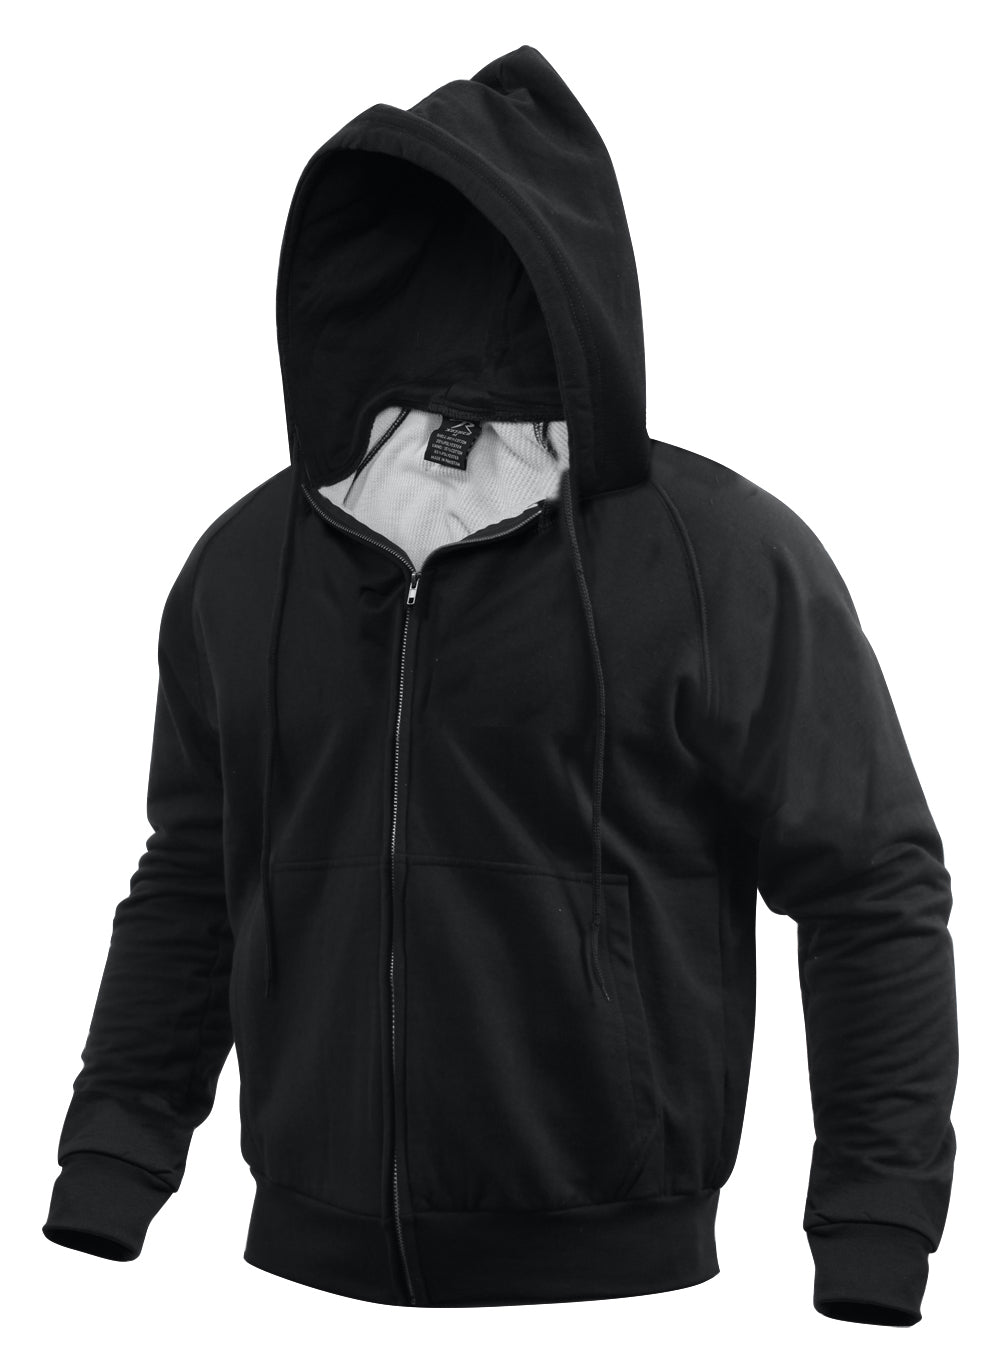 Rothco Thermal Lined Hooded Sweatshirt